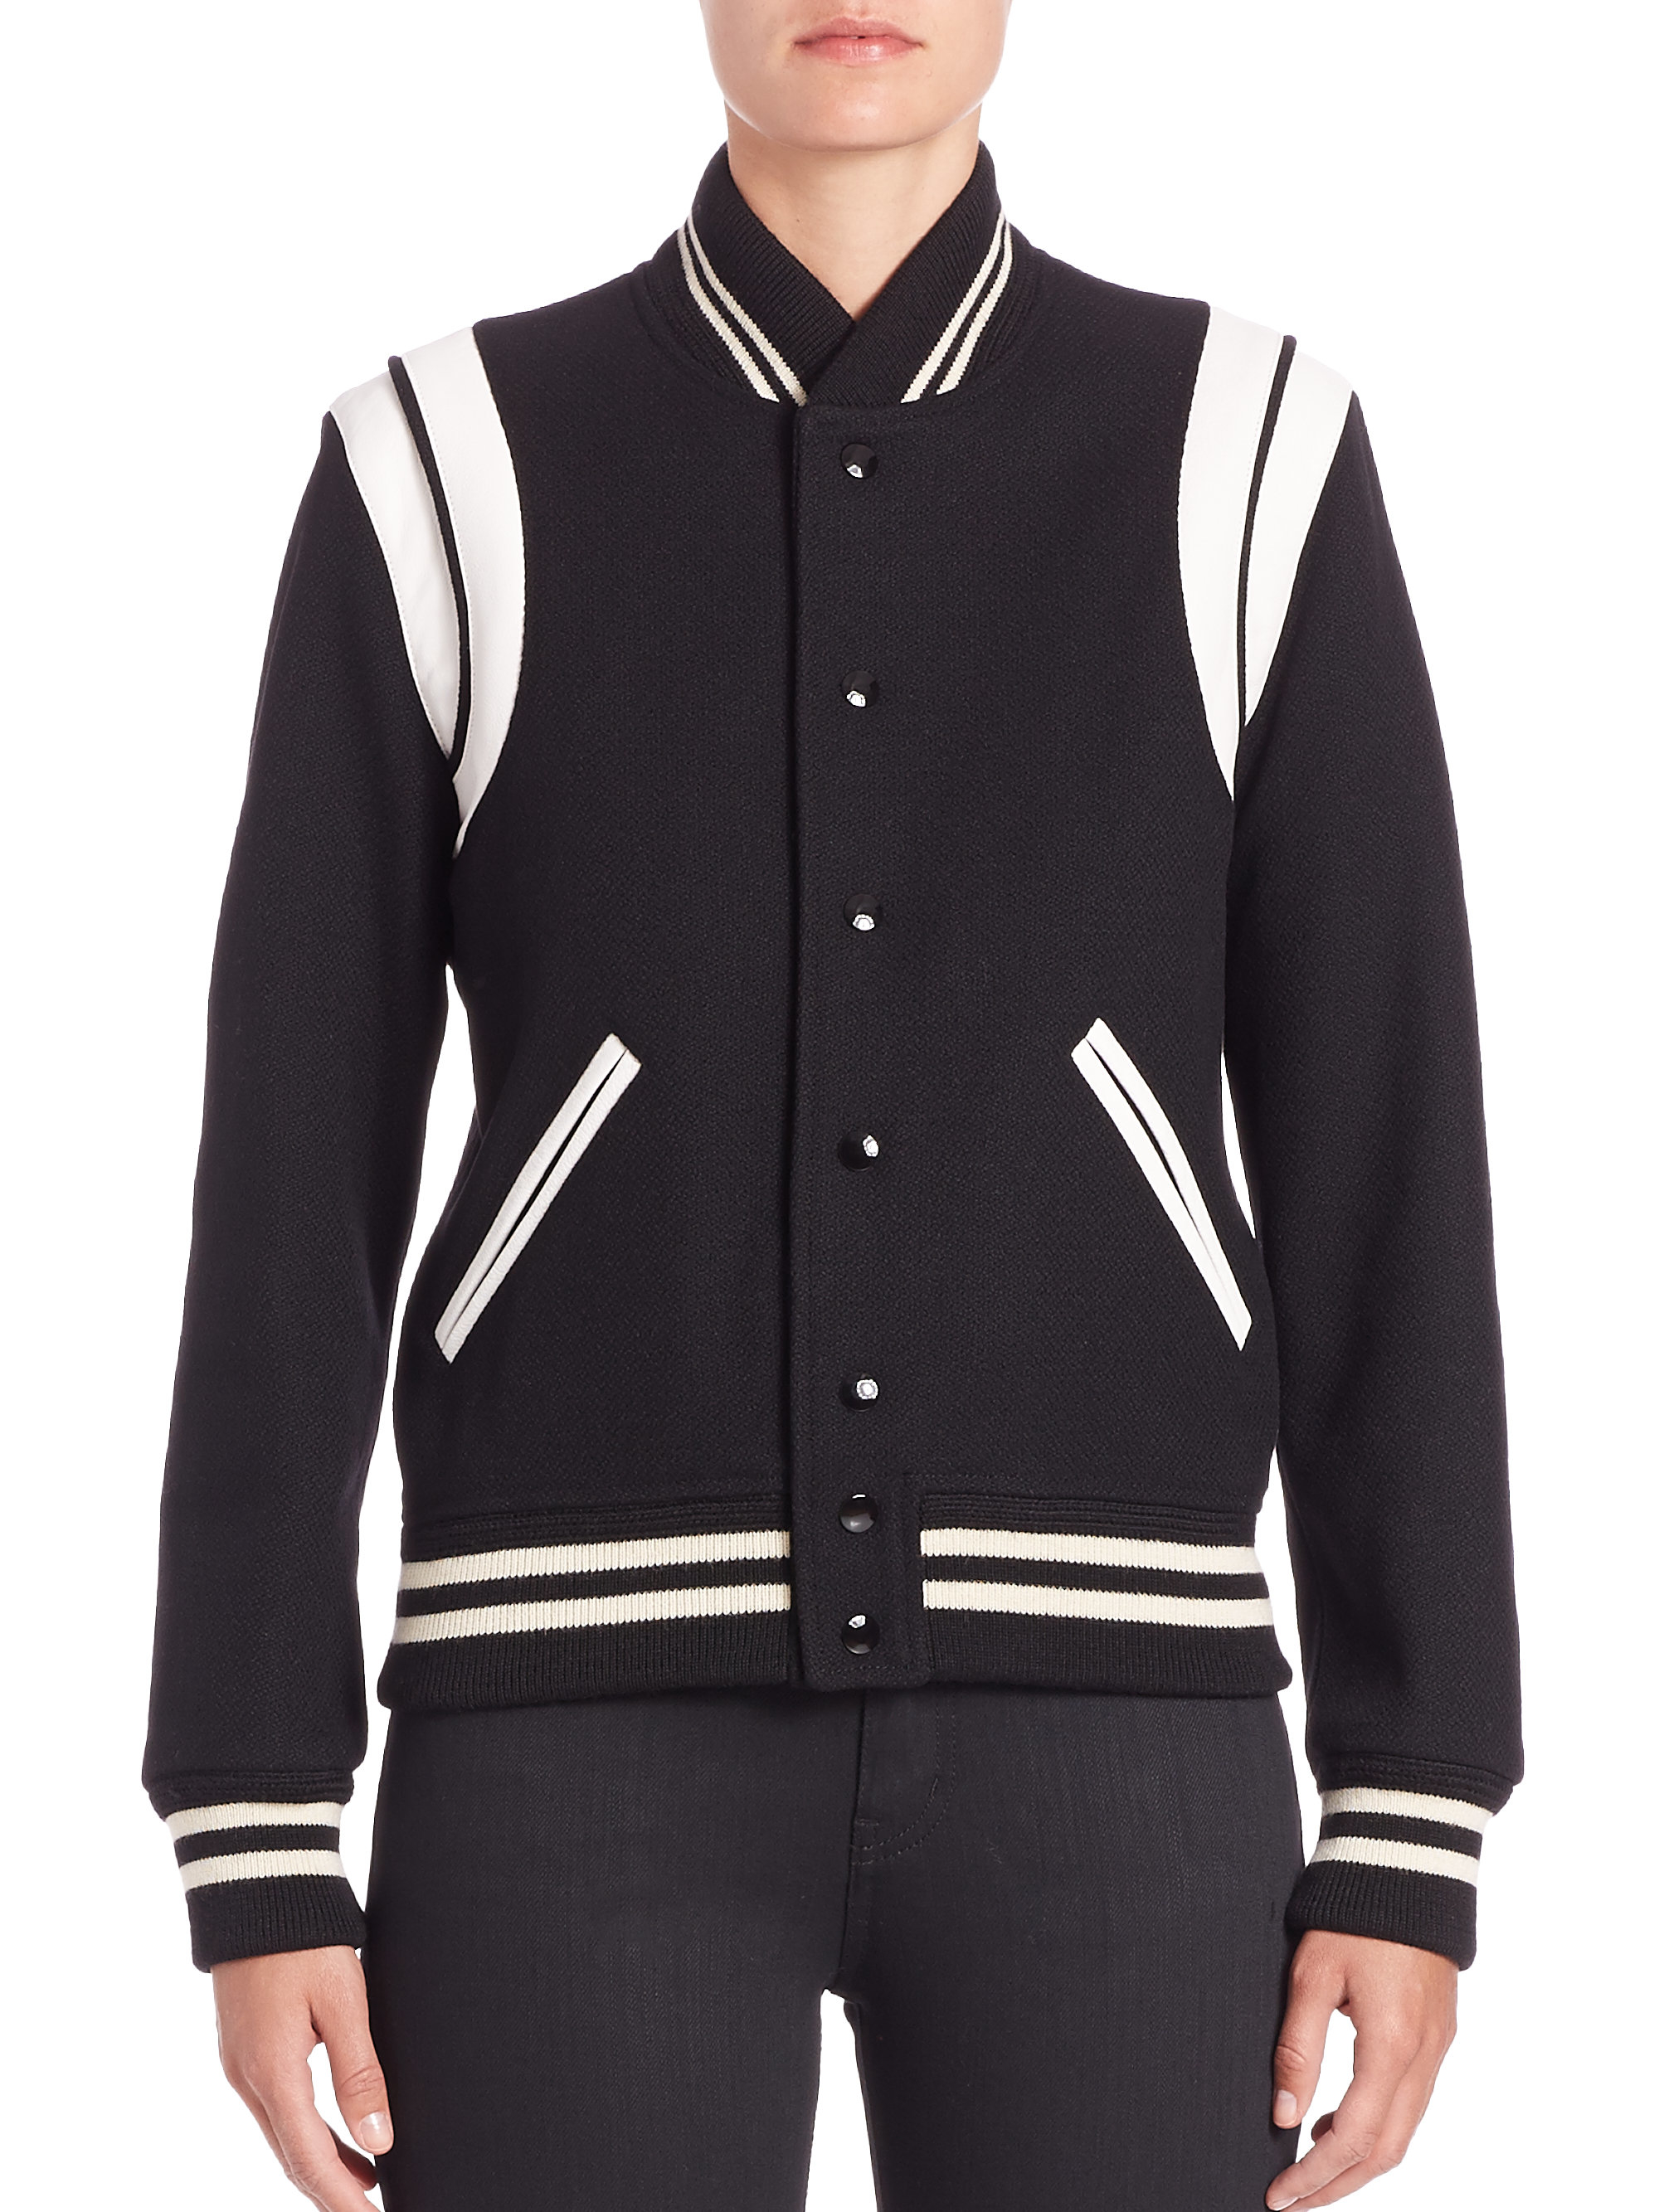 Lyst - Saint Laurent Teddy Leather-Trimmed Wool Varsity Jacket in Black